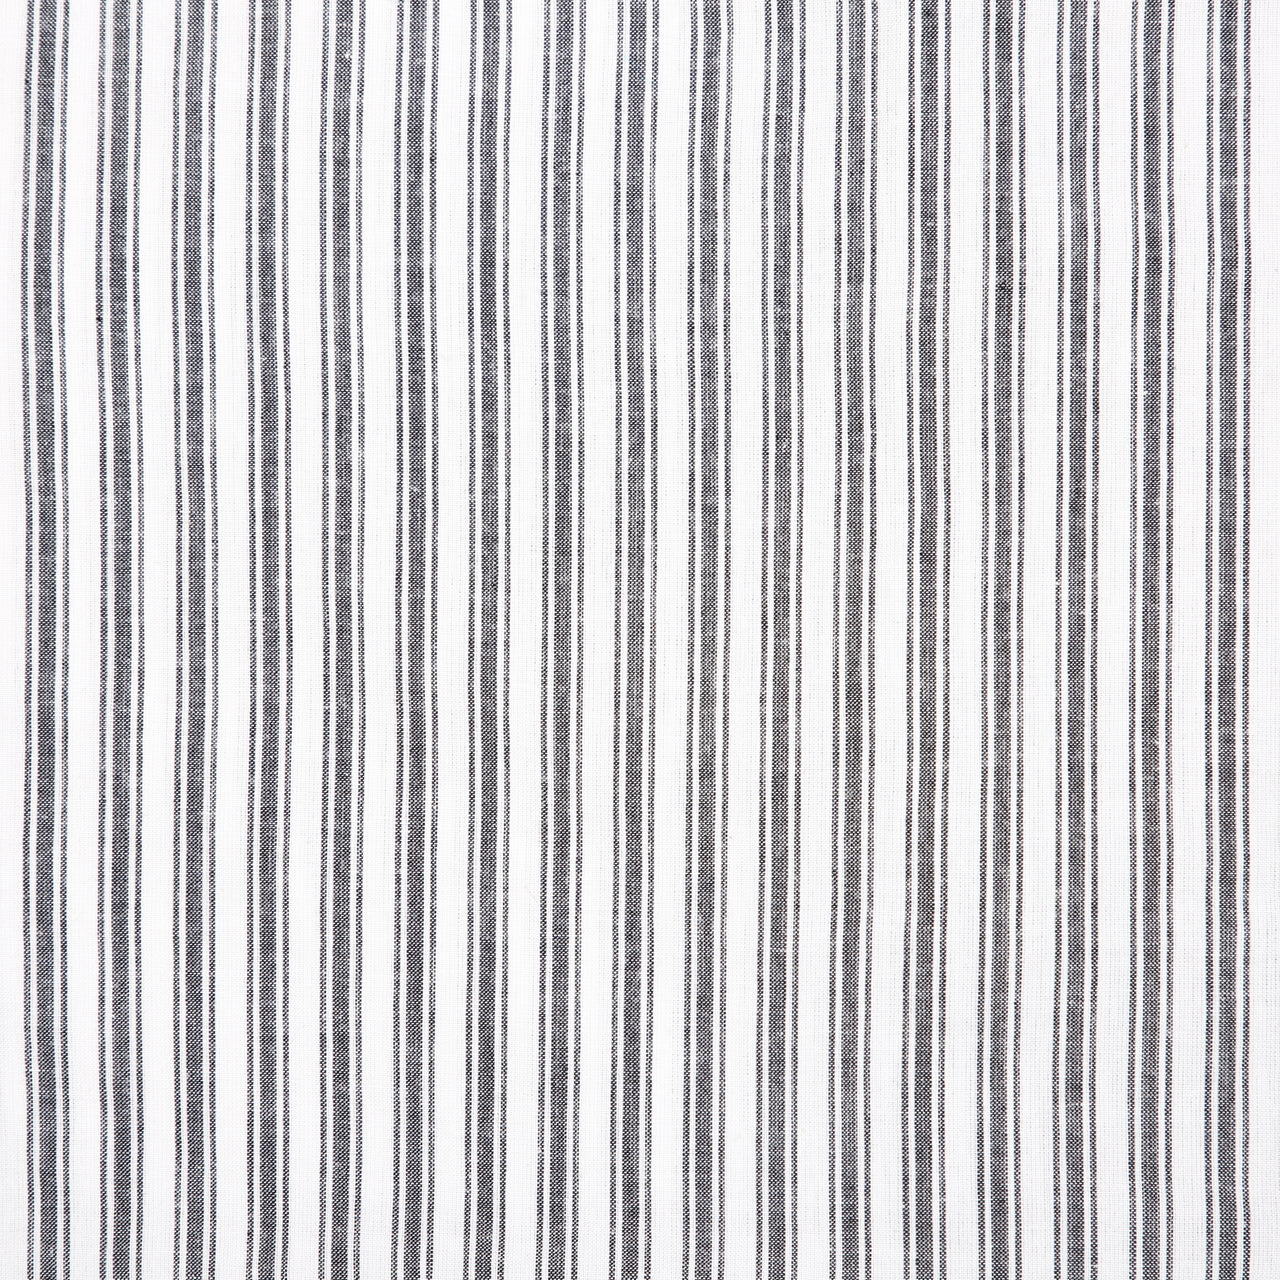 Sawyer Mill Black Ruffled Ticking Stripe King Pillow Case Set of 2 21x36+4 VHC Brands